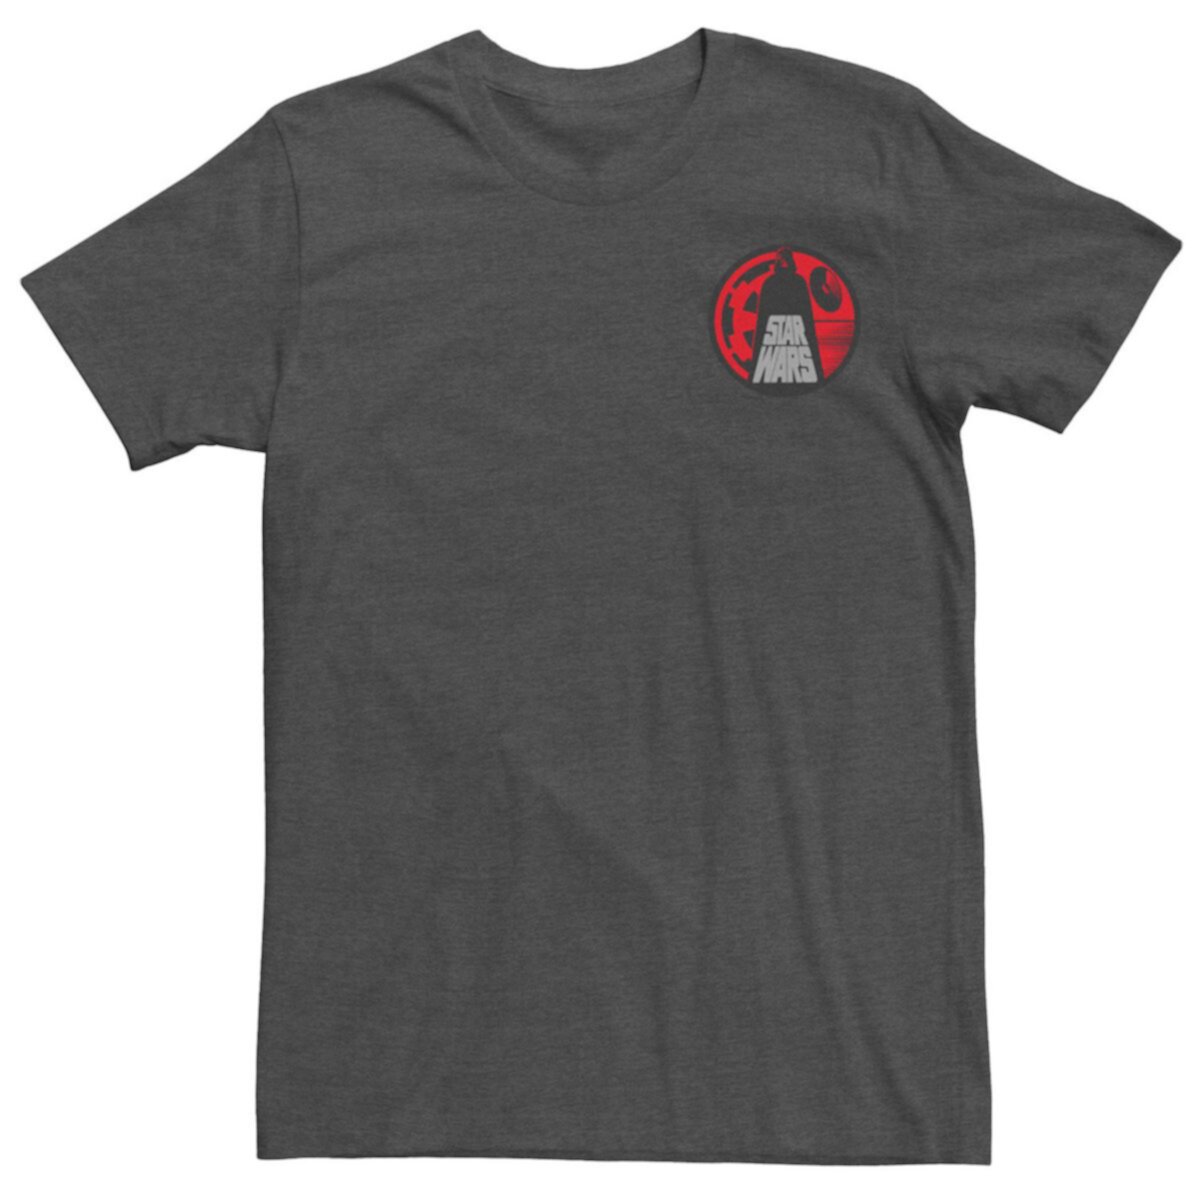 Мужская футболка с графическим логотипом и логотипом Star Wars Darth Vader Star Wars